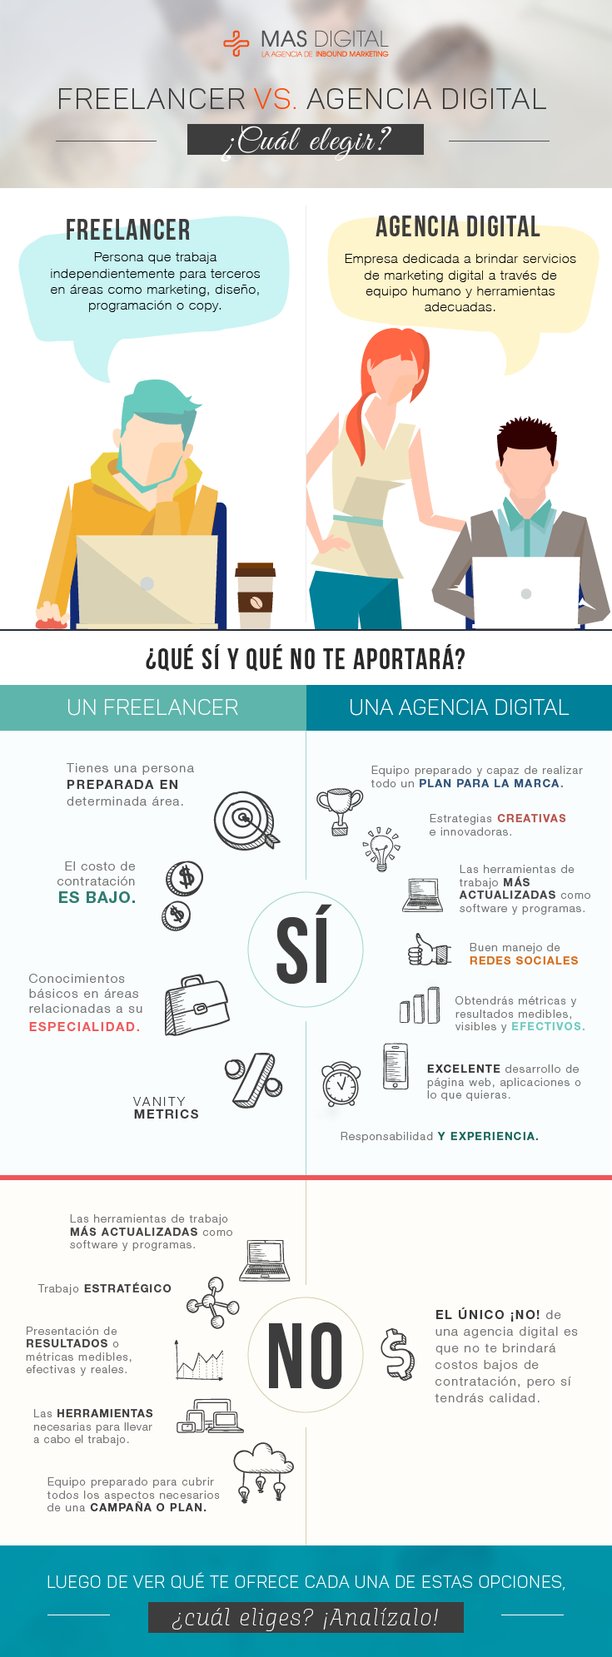 Freelancer_vs_agencia_digital_correcto.png